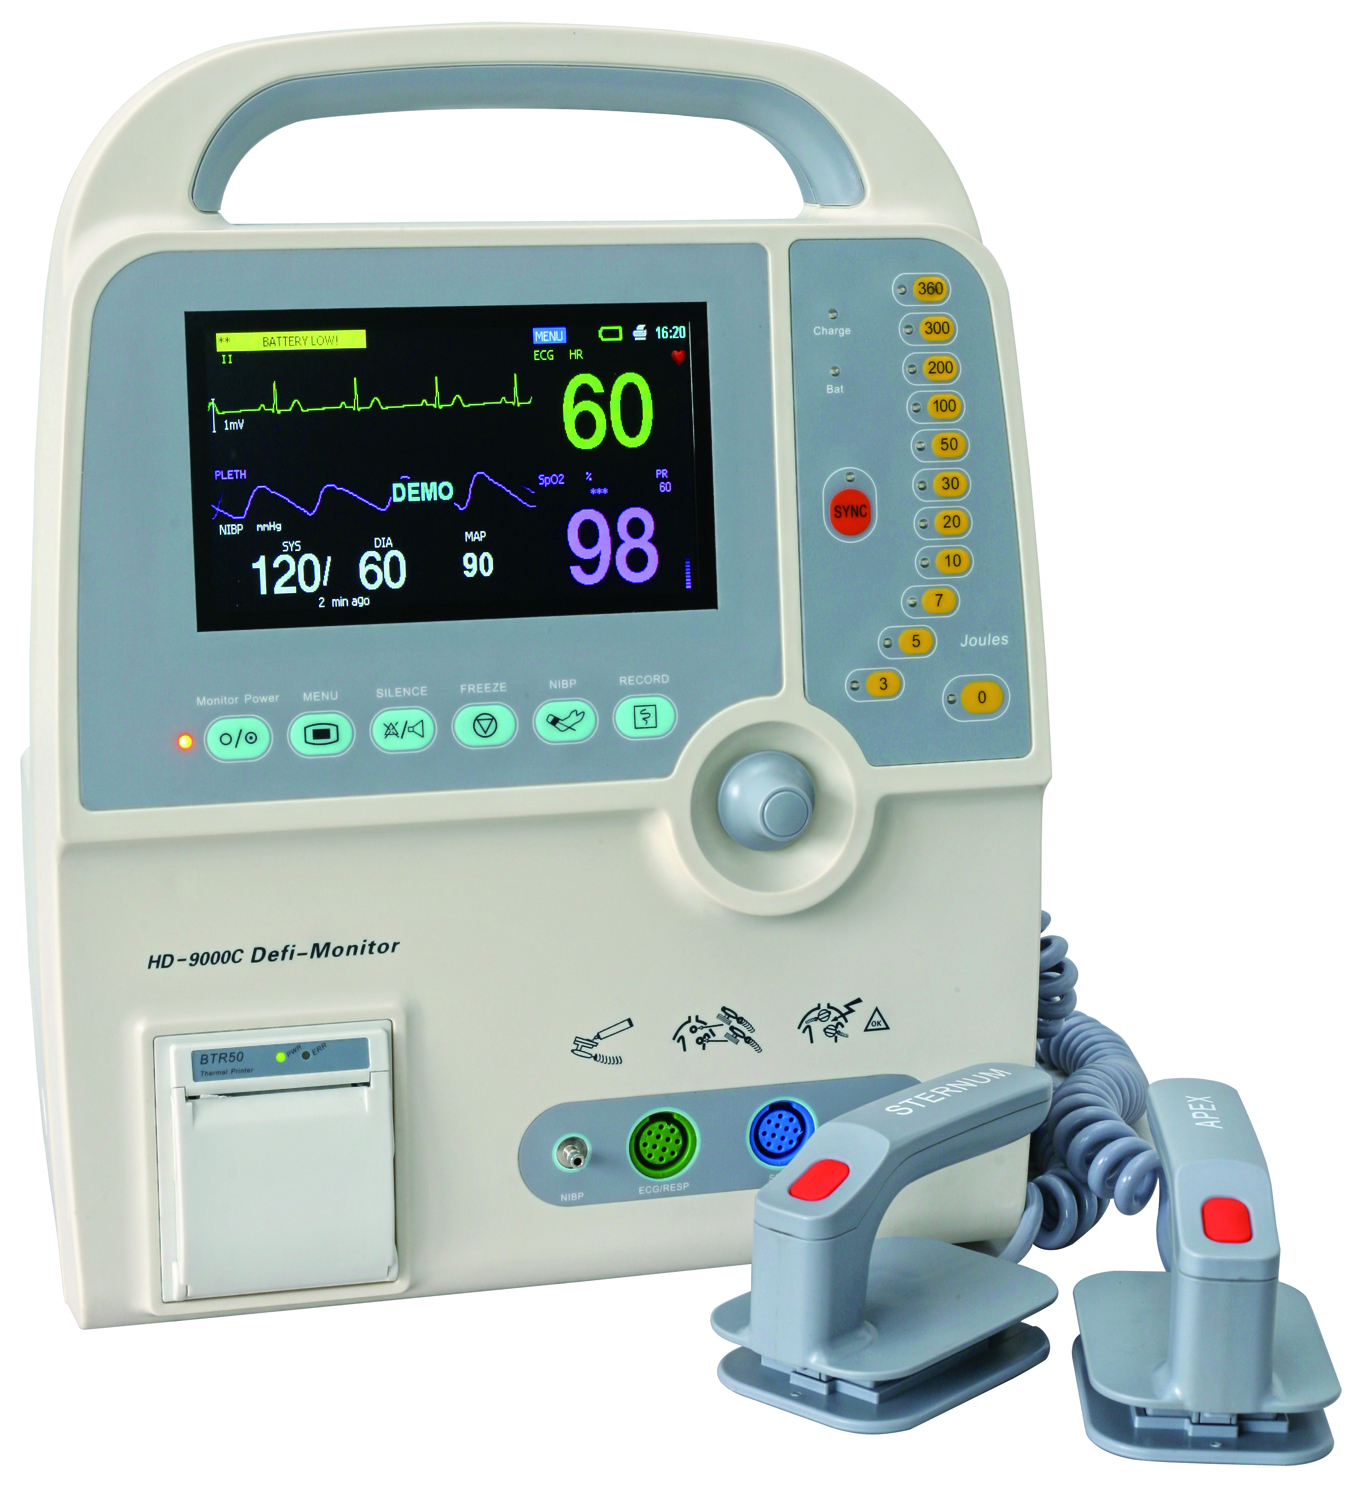 LG-HD9000C Defibrillator for Medical Use